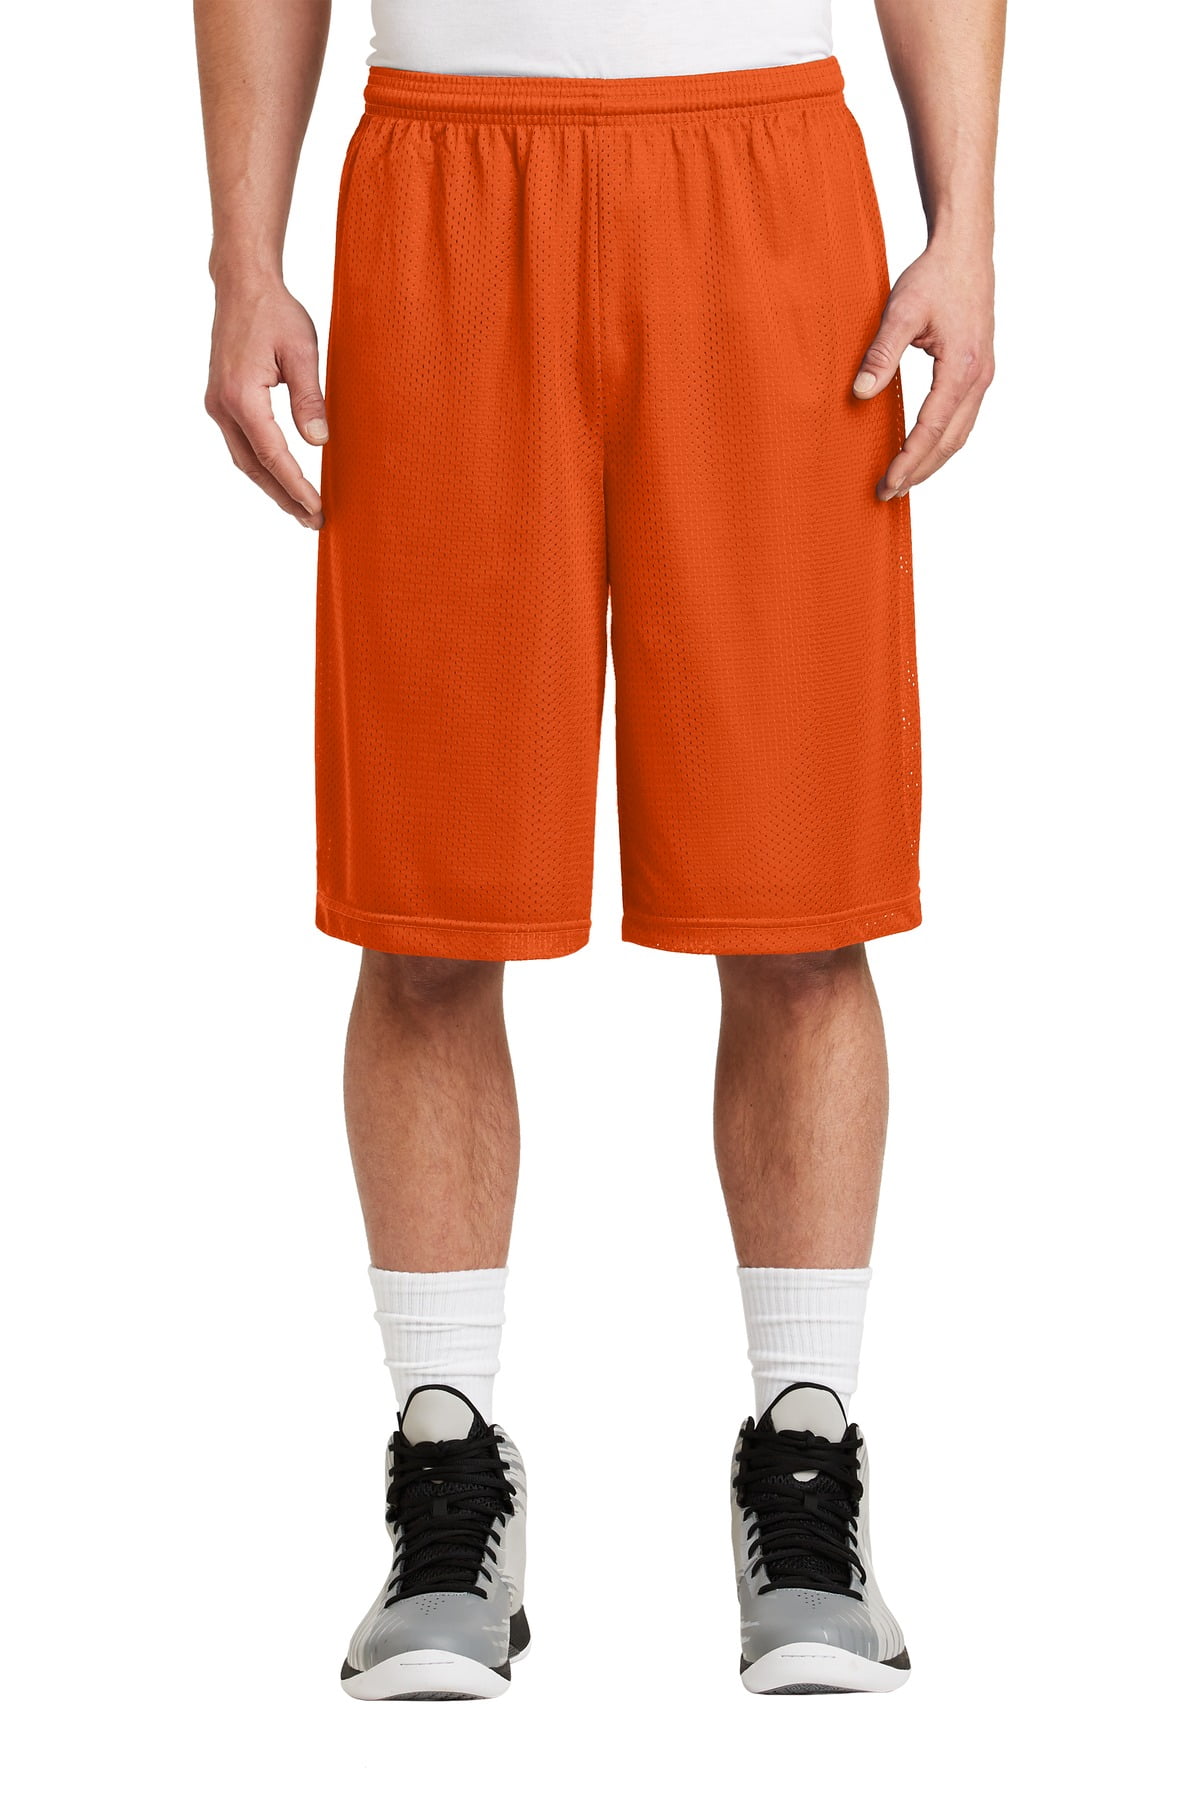 Mens Mesh Basketball Shorts Unisex Workout Gym Pockets Short Pants Colors 